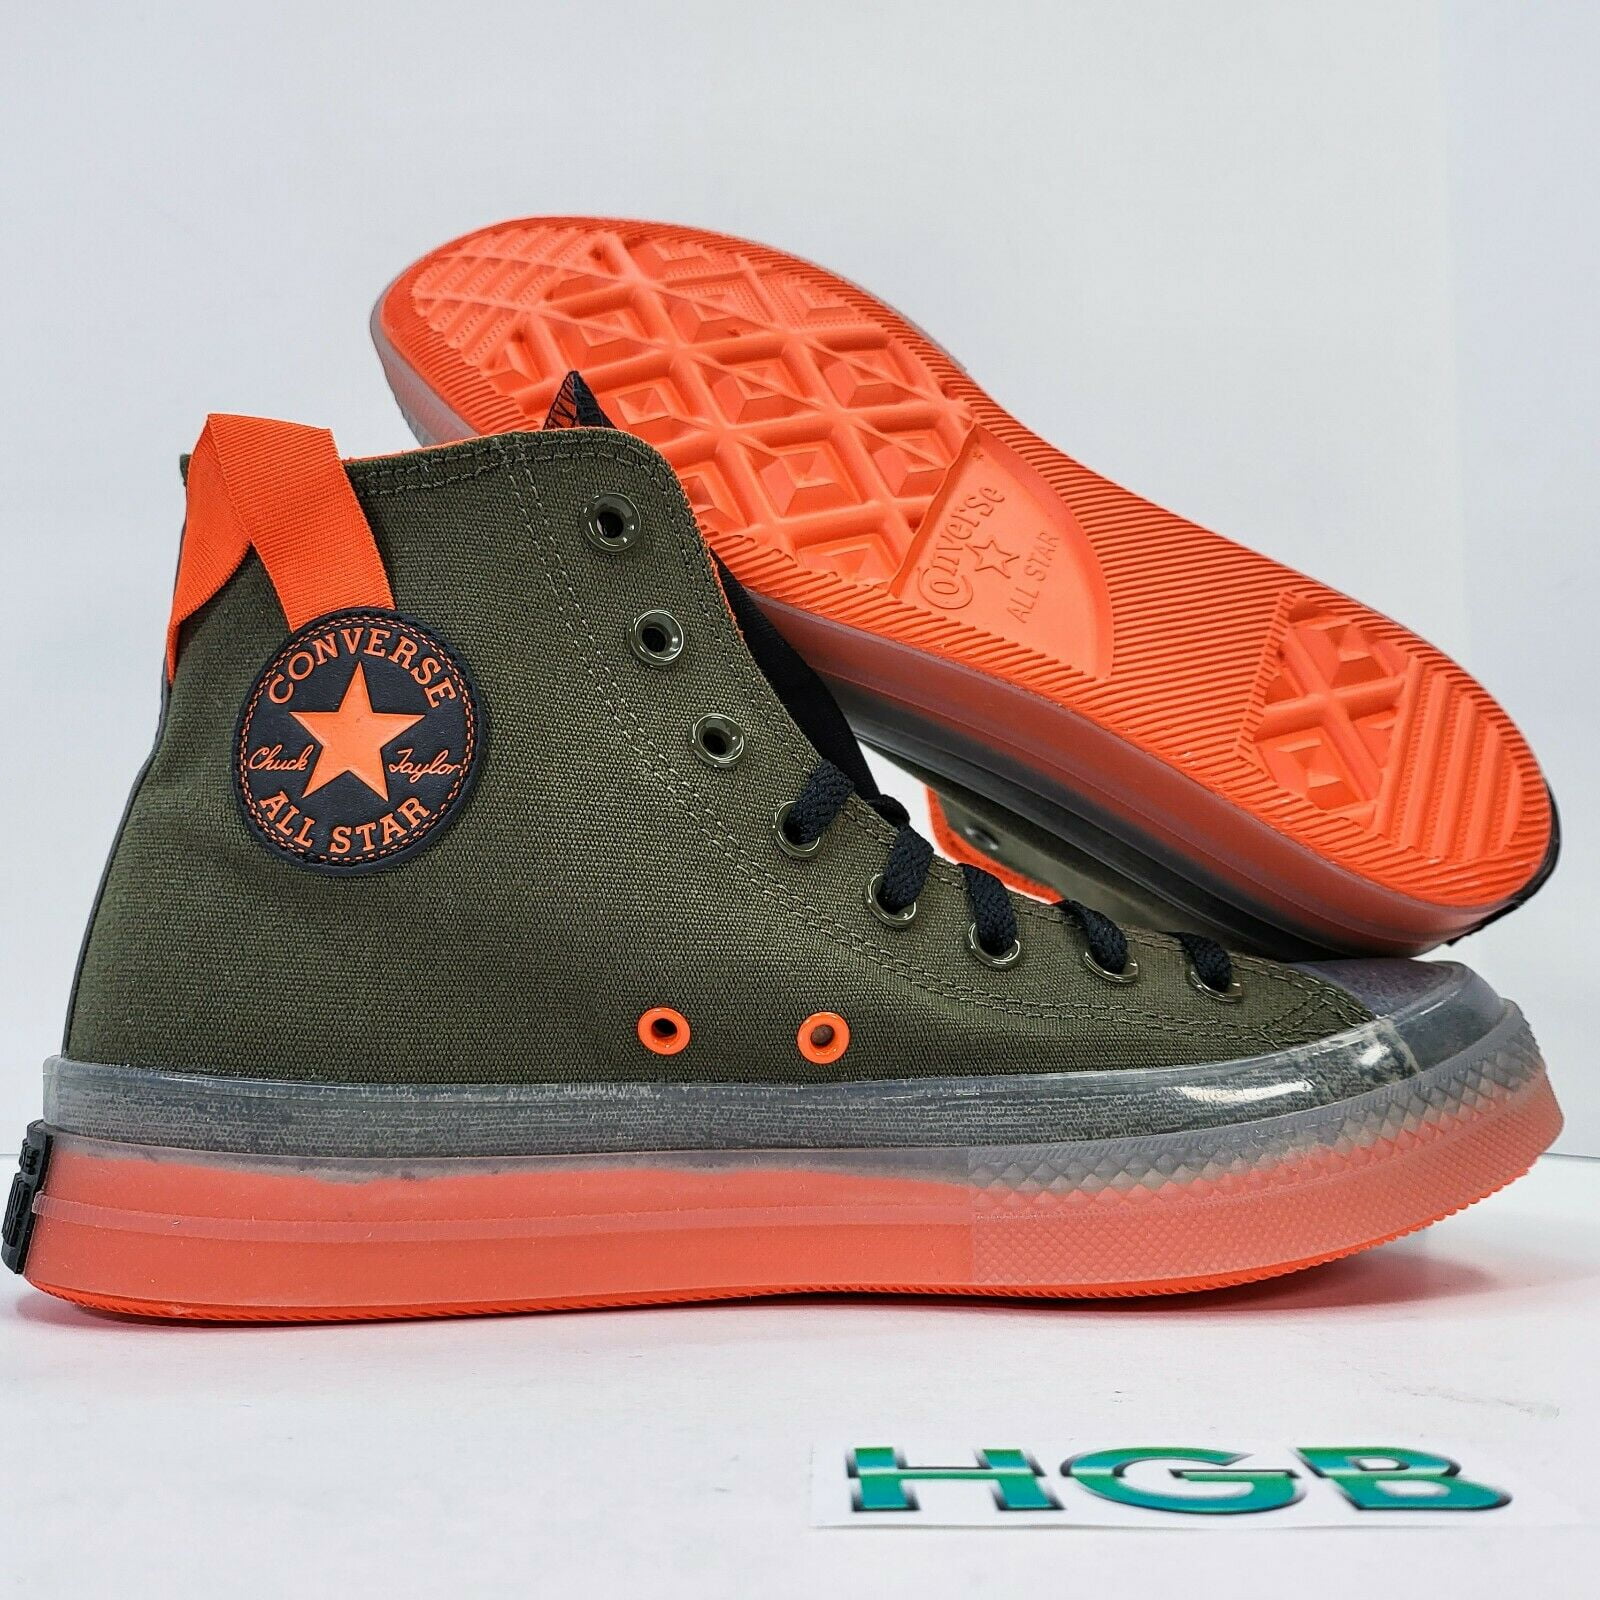 Converse Chuck Taylor All Star CX Hi Men's Limited Sneaker Shoe Green  171997C 